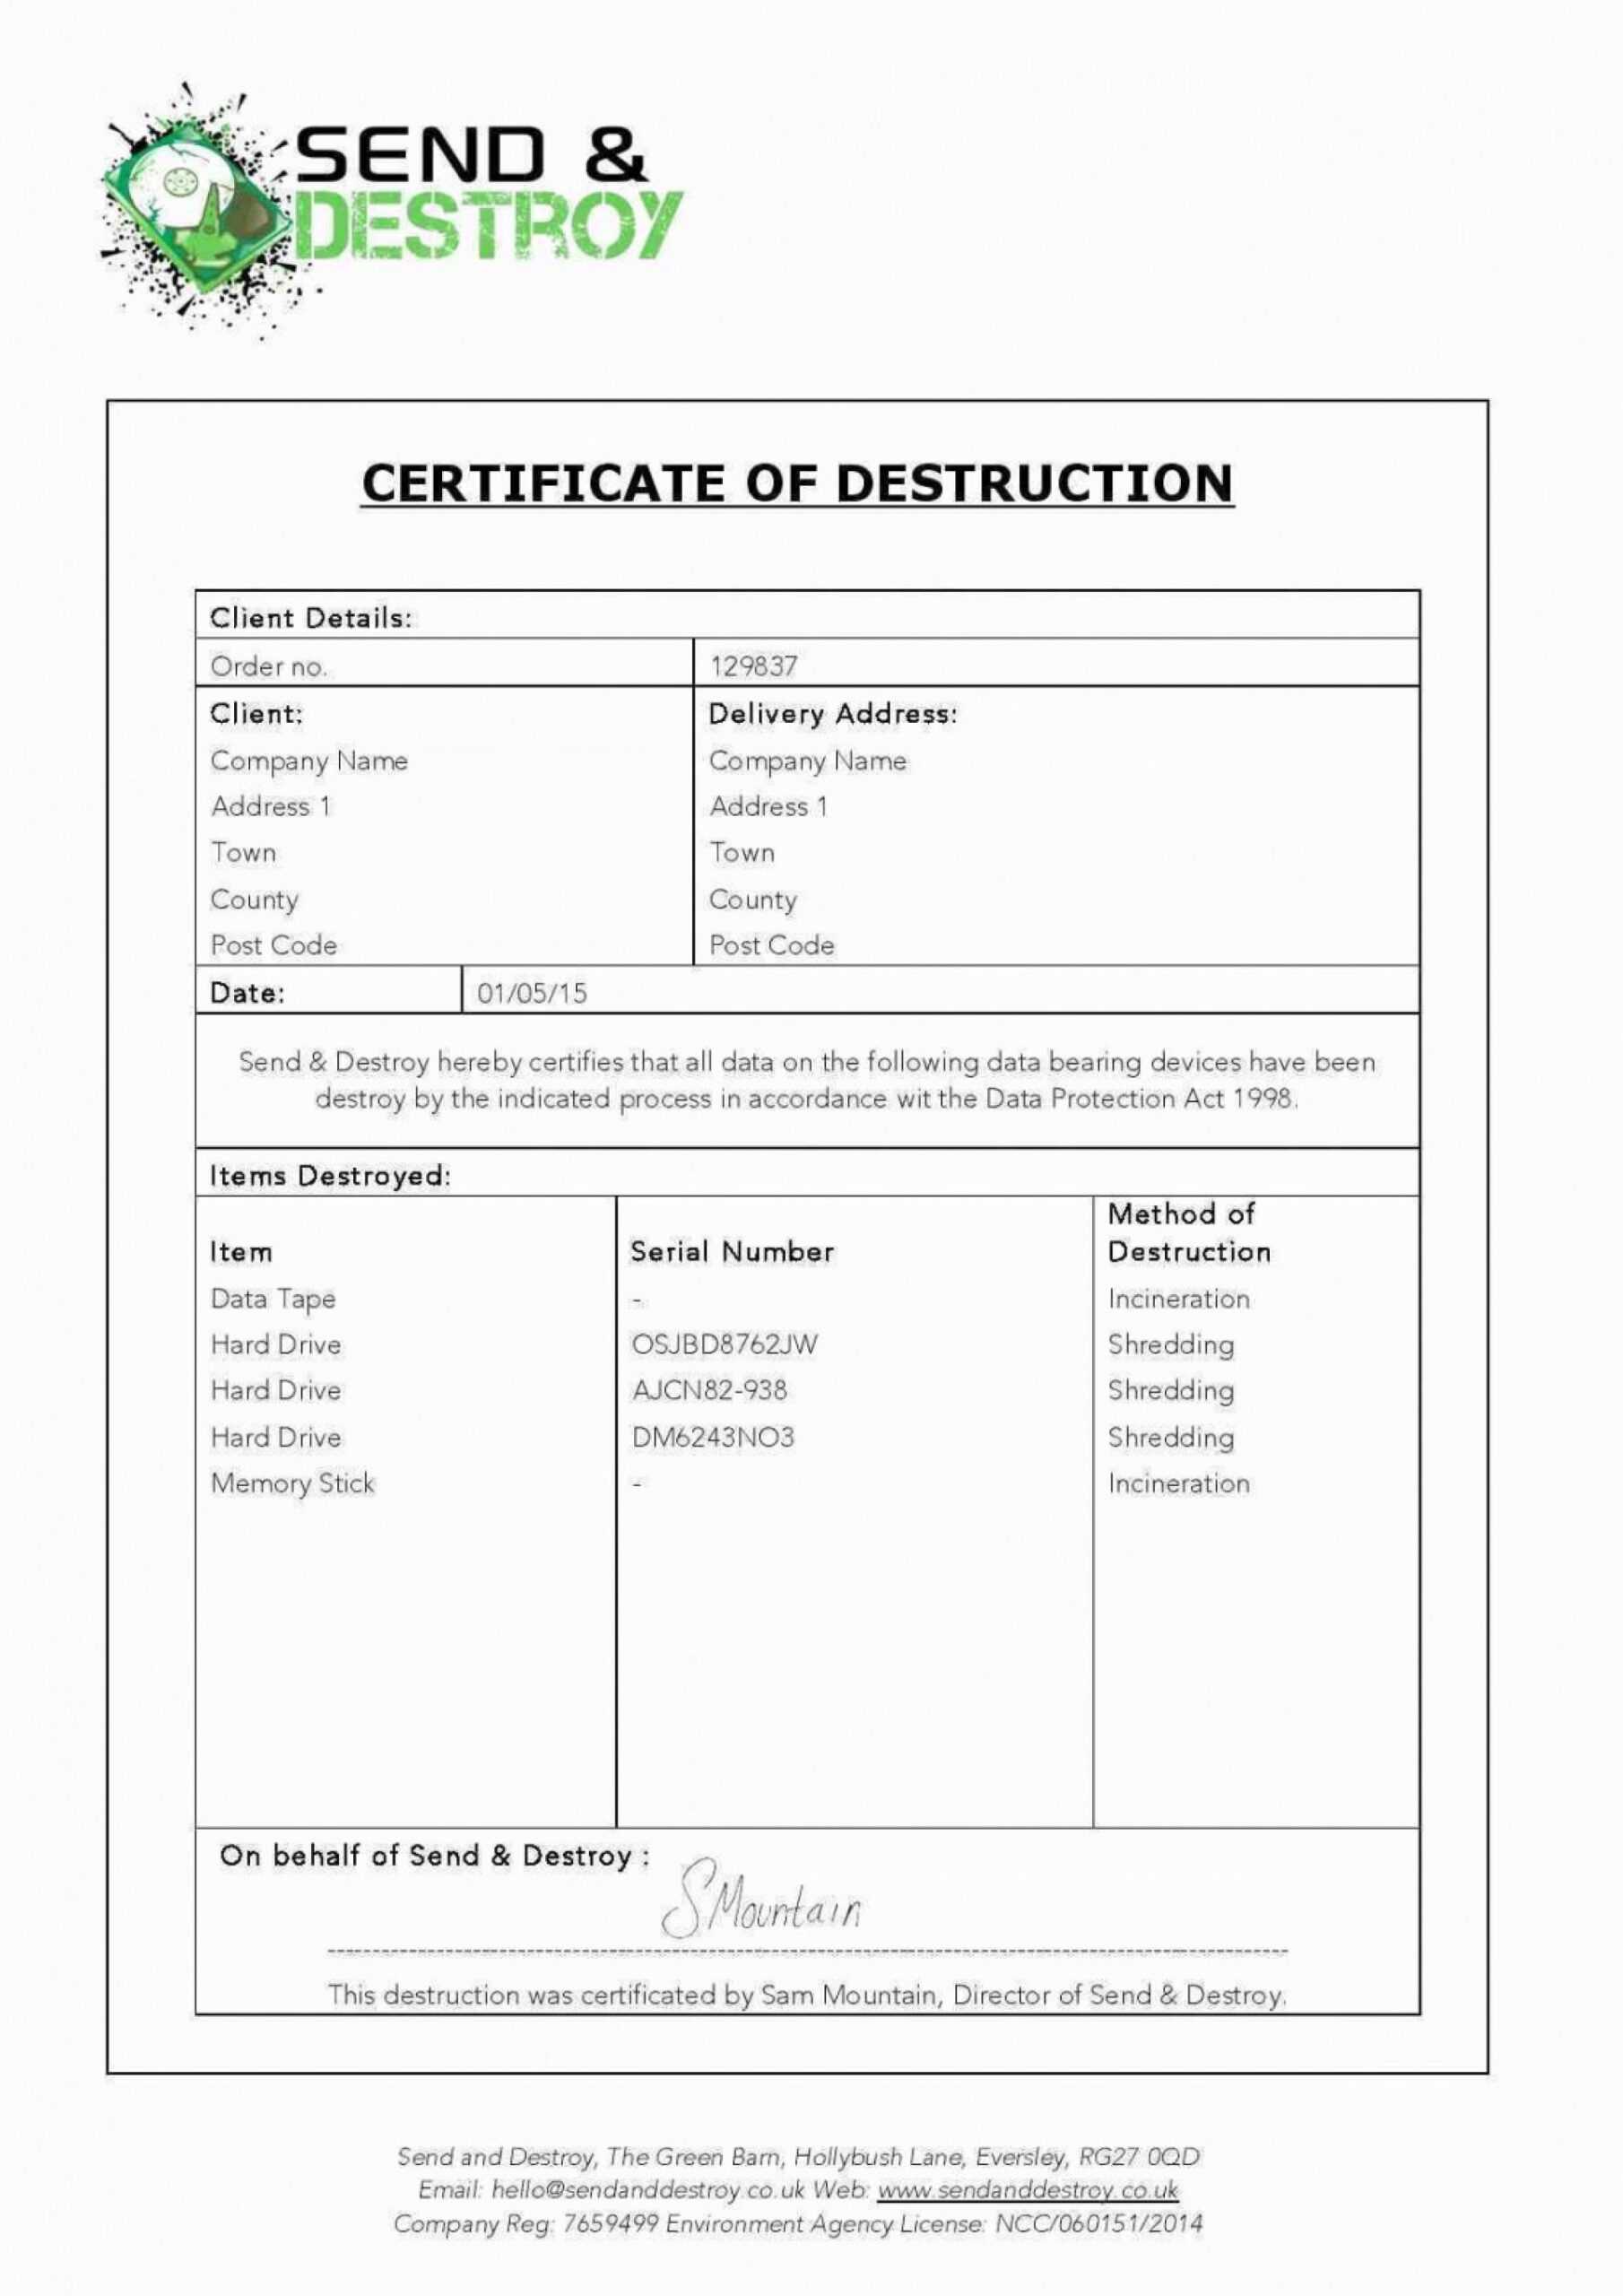 026 Certificate Of Destruction Template Word Ideal Sample With Free Certificate Of Destruction Template